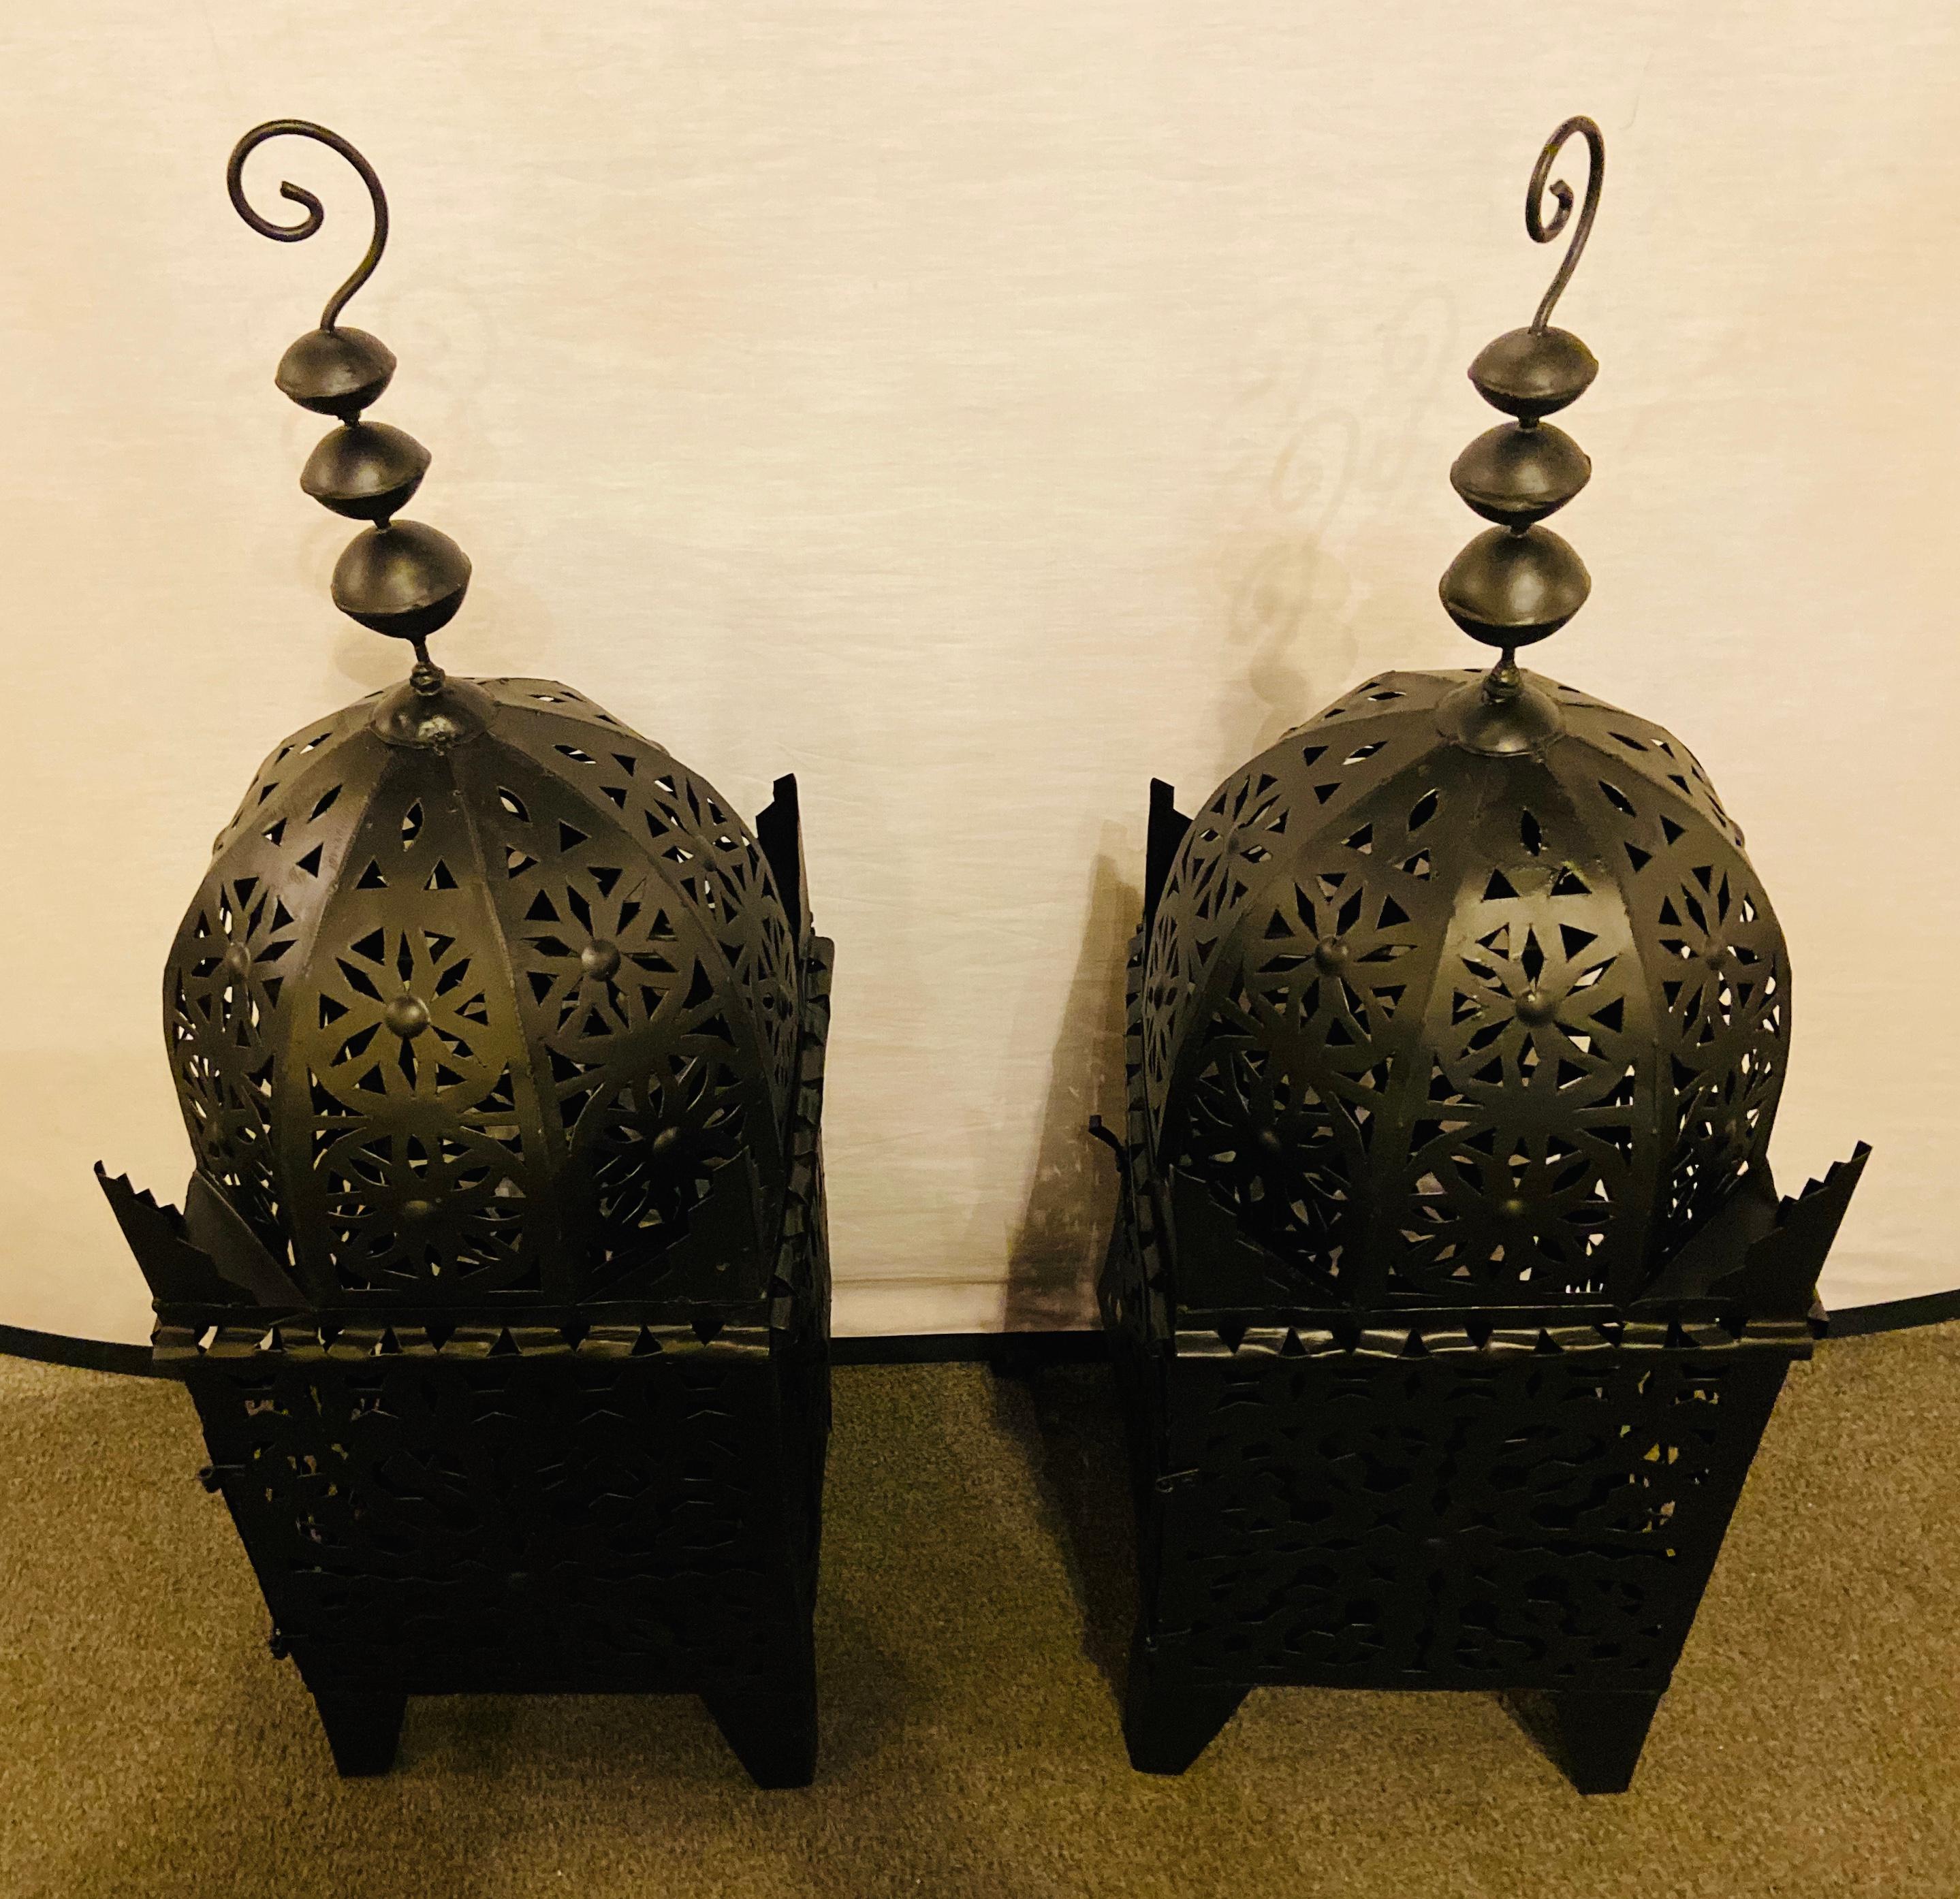 Bohemian Garden Floor Lantern or Candleholder in Black, a Pair